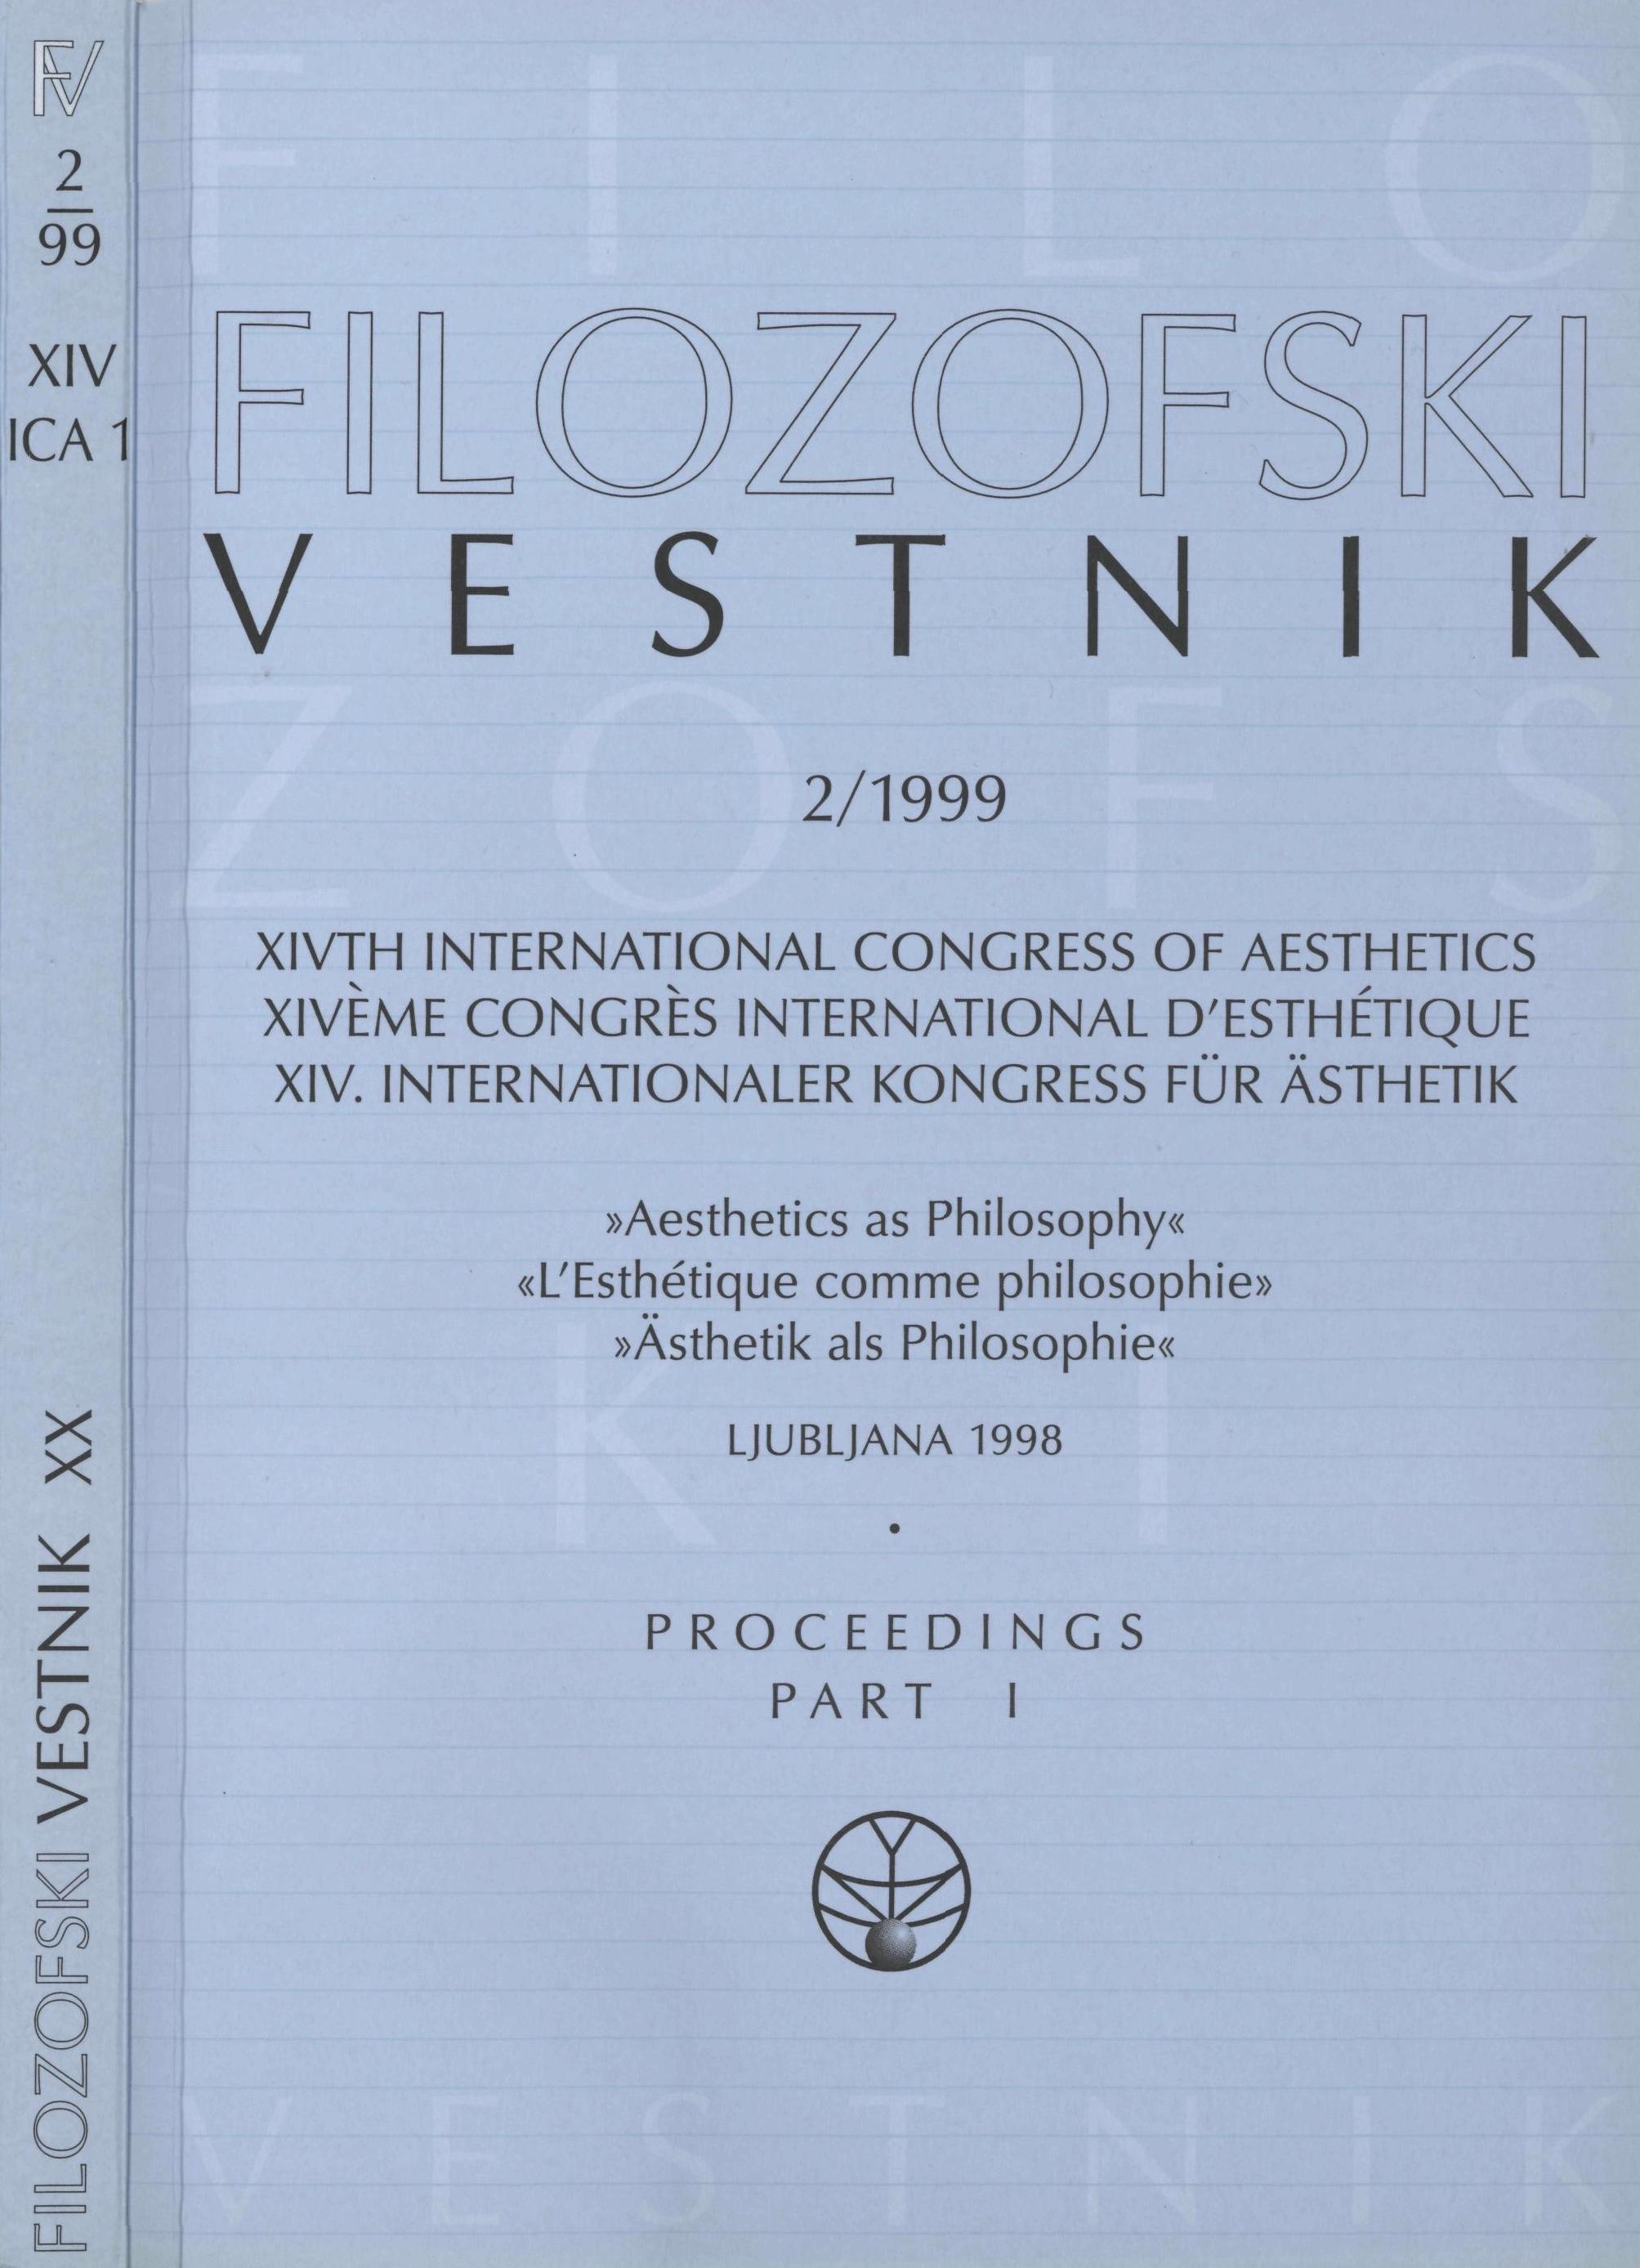 					View Vol. 20 No. 2 (1999): XIVth International Congress of Aesthetics, "Aesthetics as Philosophy", Proceedings, Part I
				